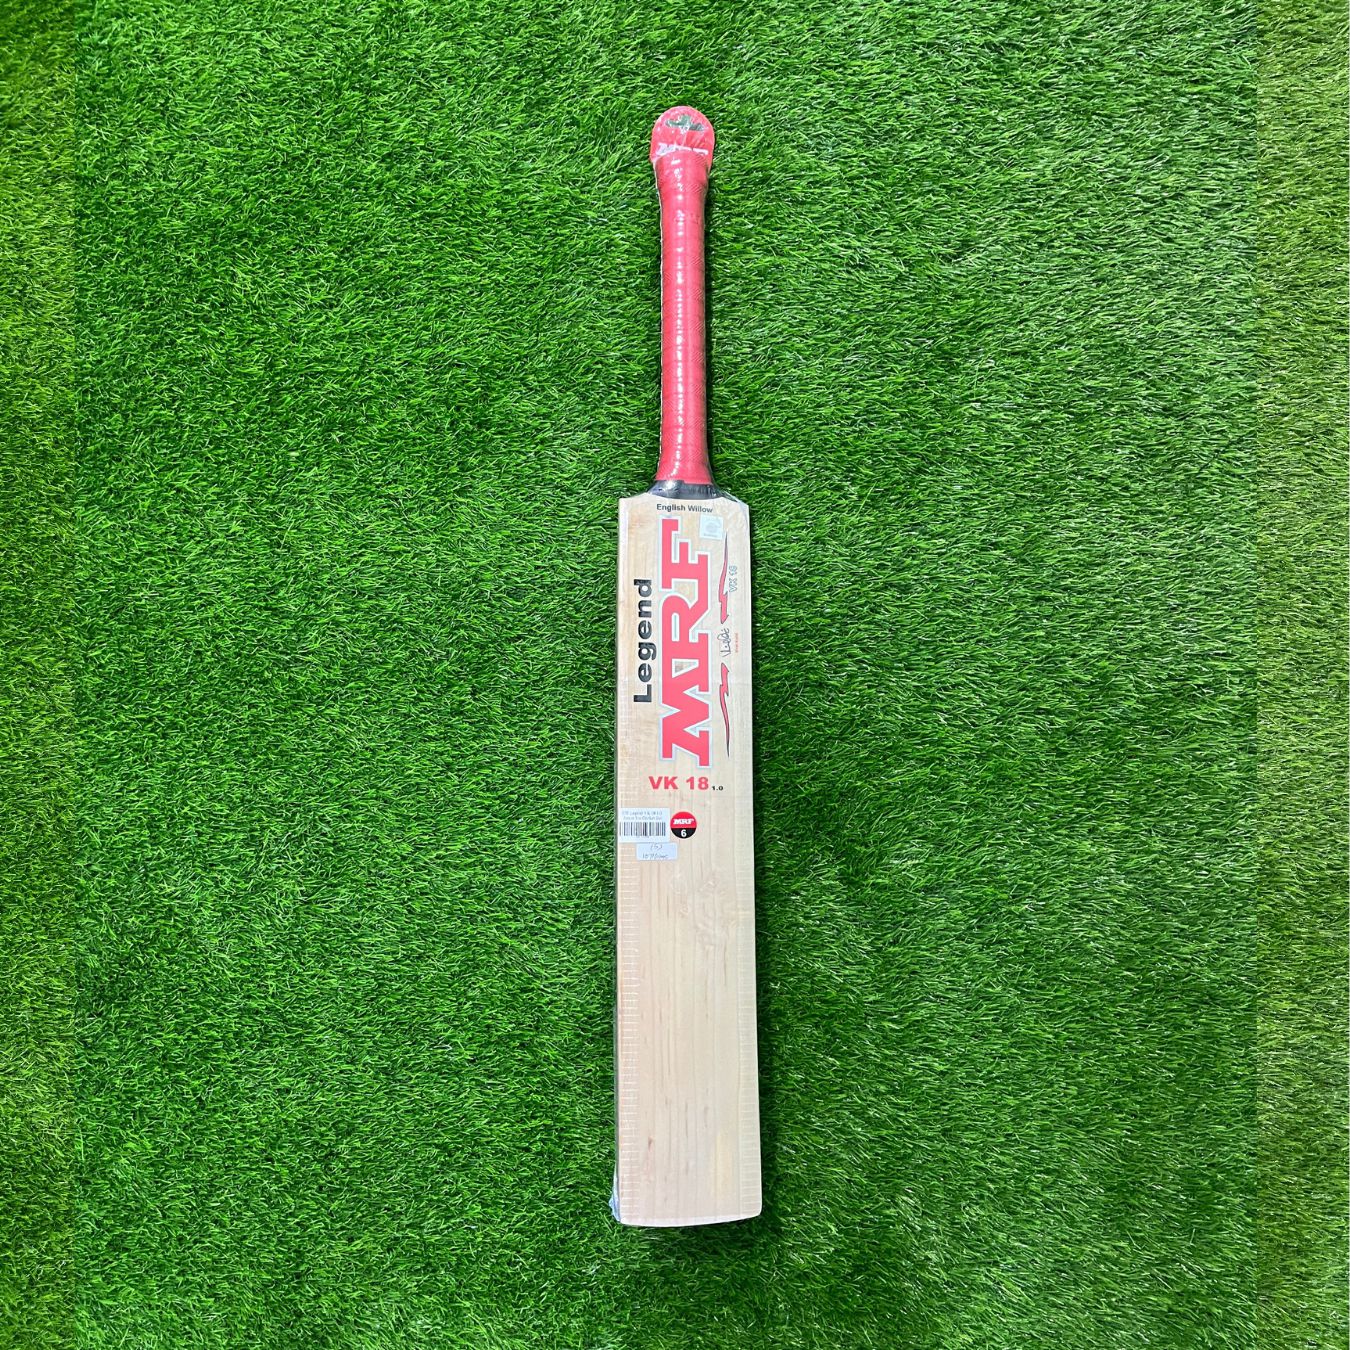 MRF Legend VK 18 1.0 English Willow Cricket Bat - Junior Size 6 (Six)